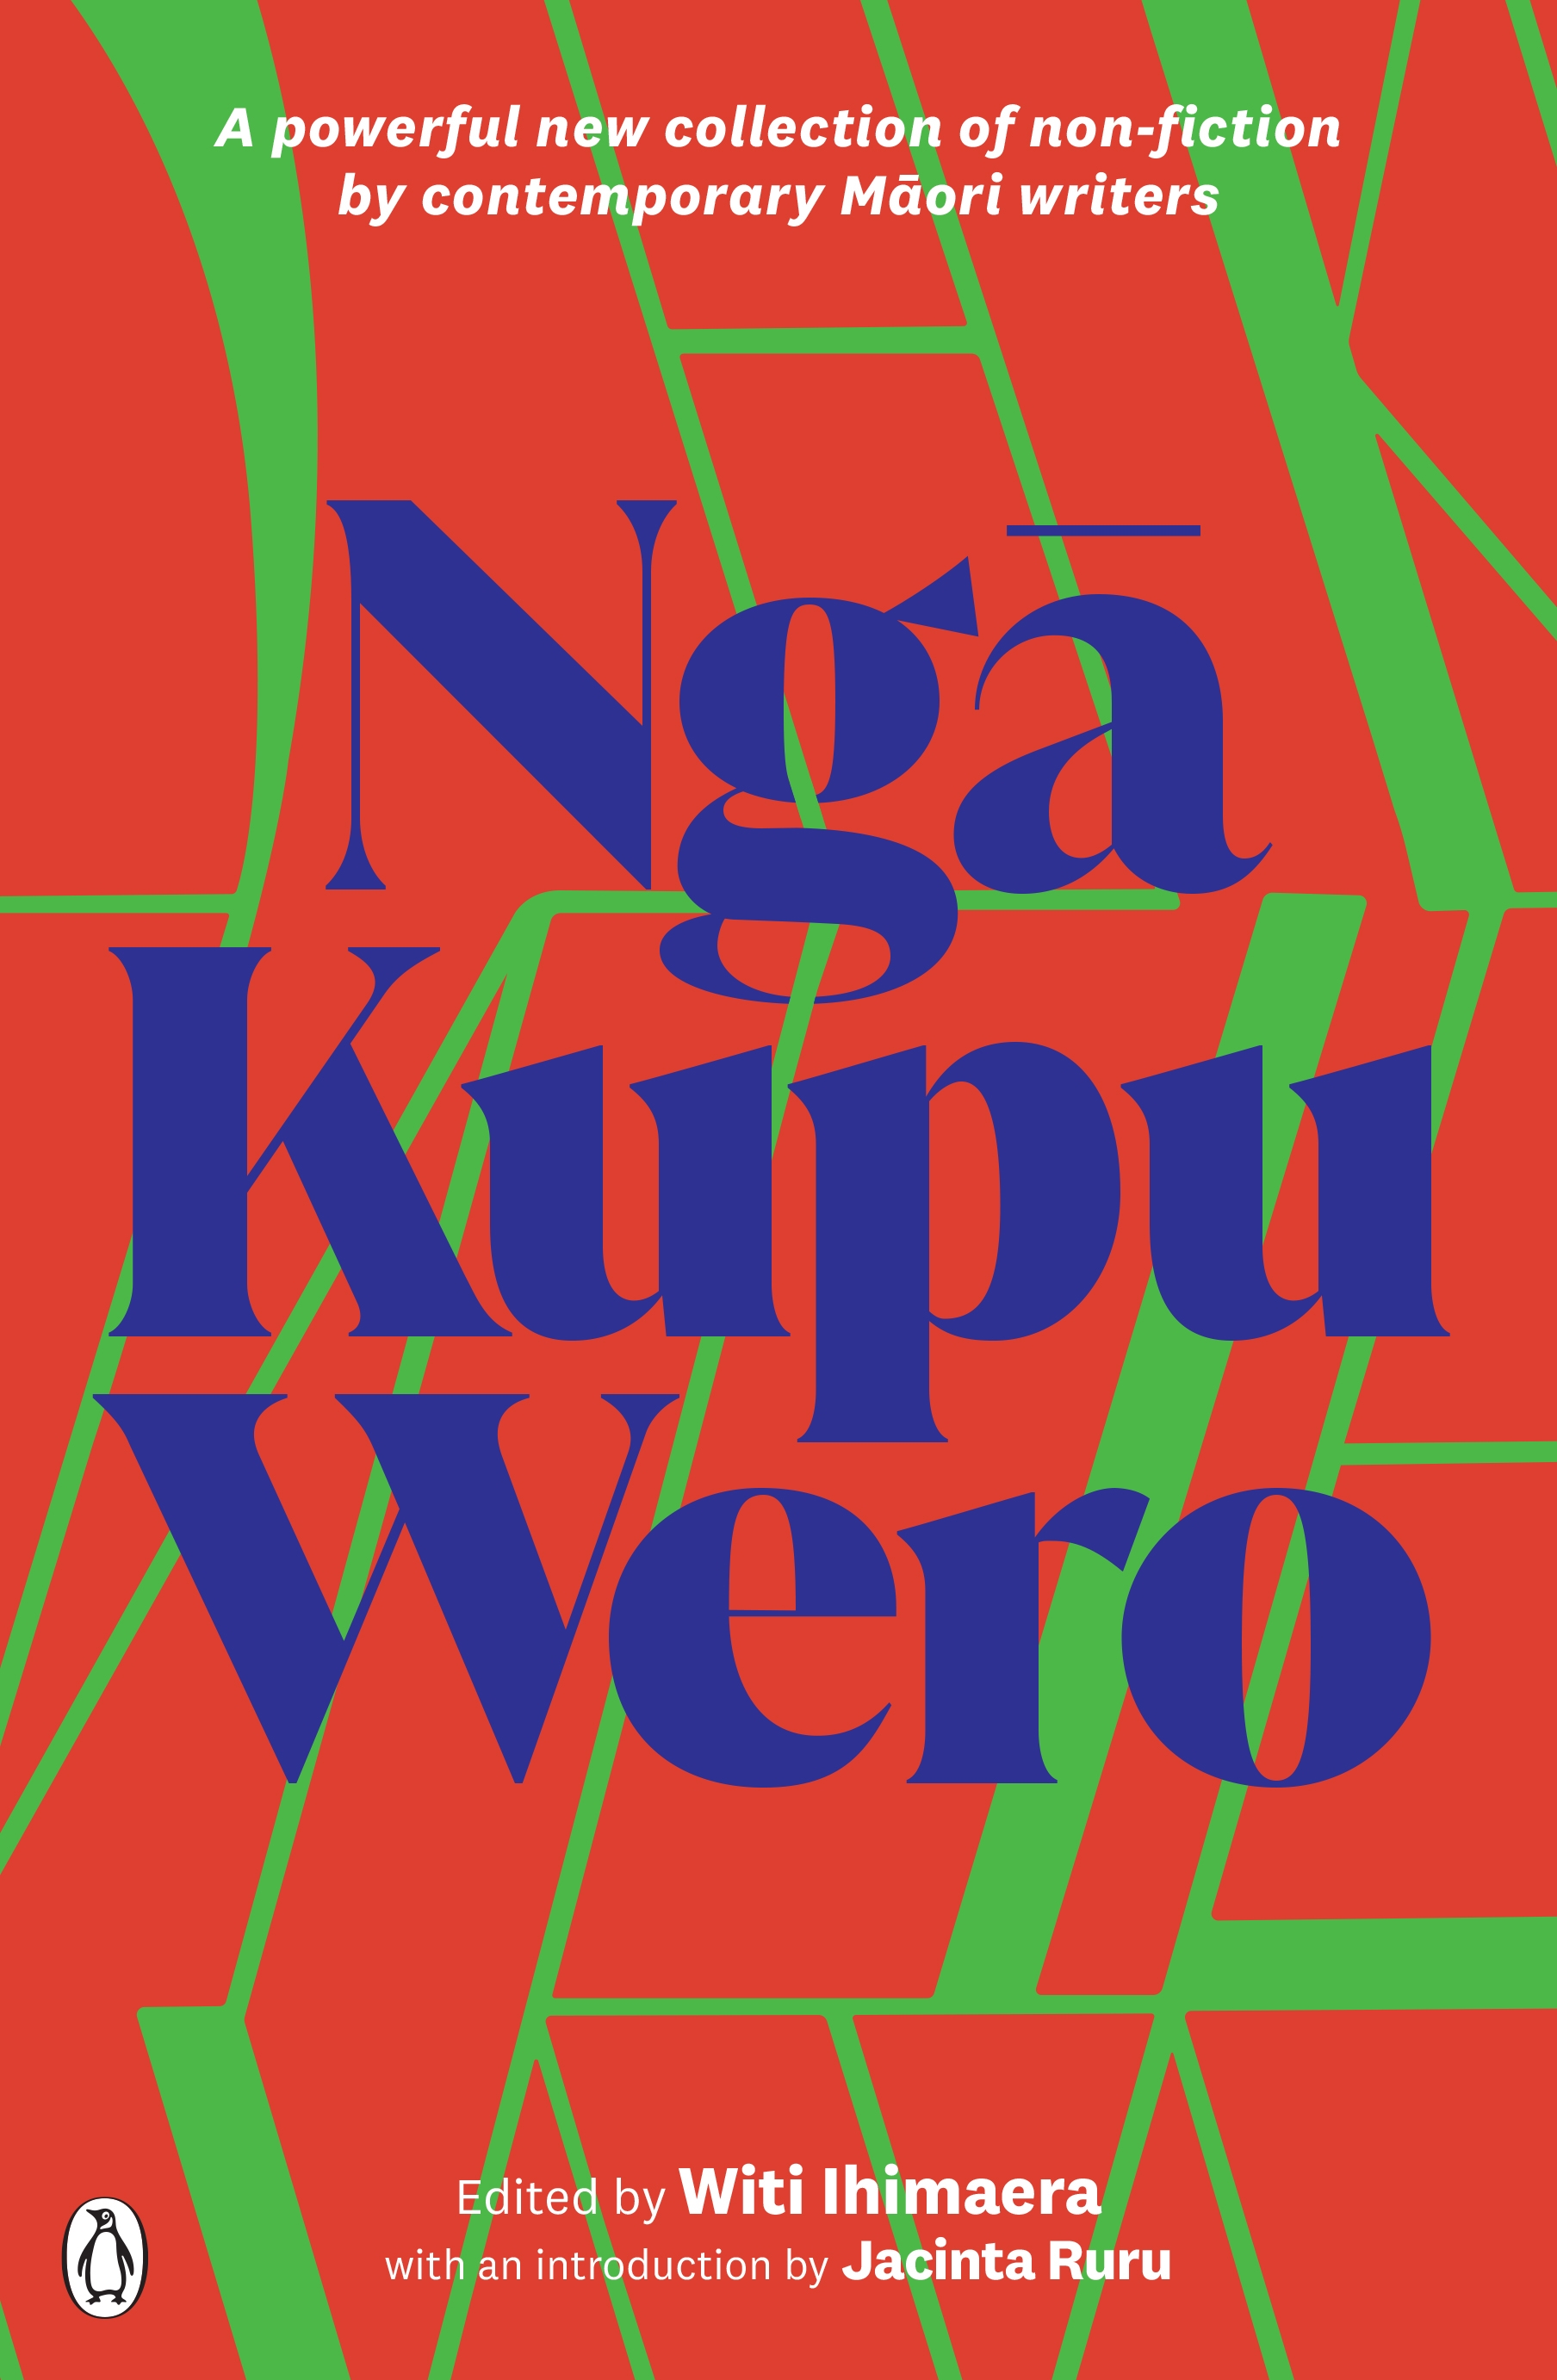 Image of the cover of Nga Kupu Wero